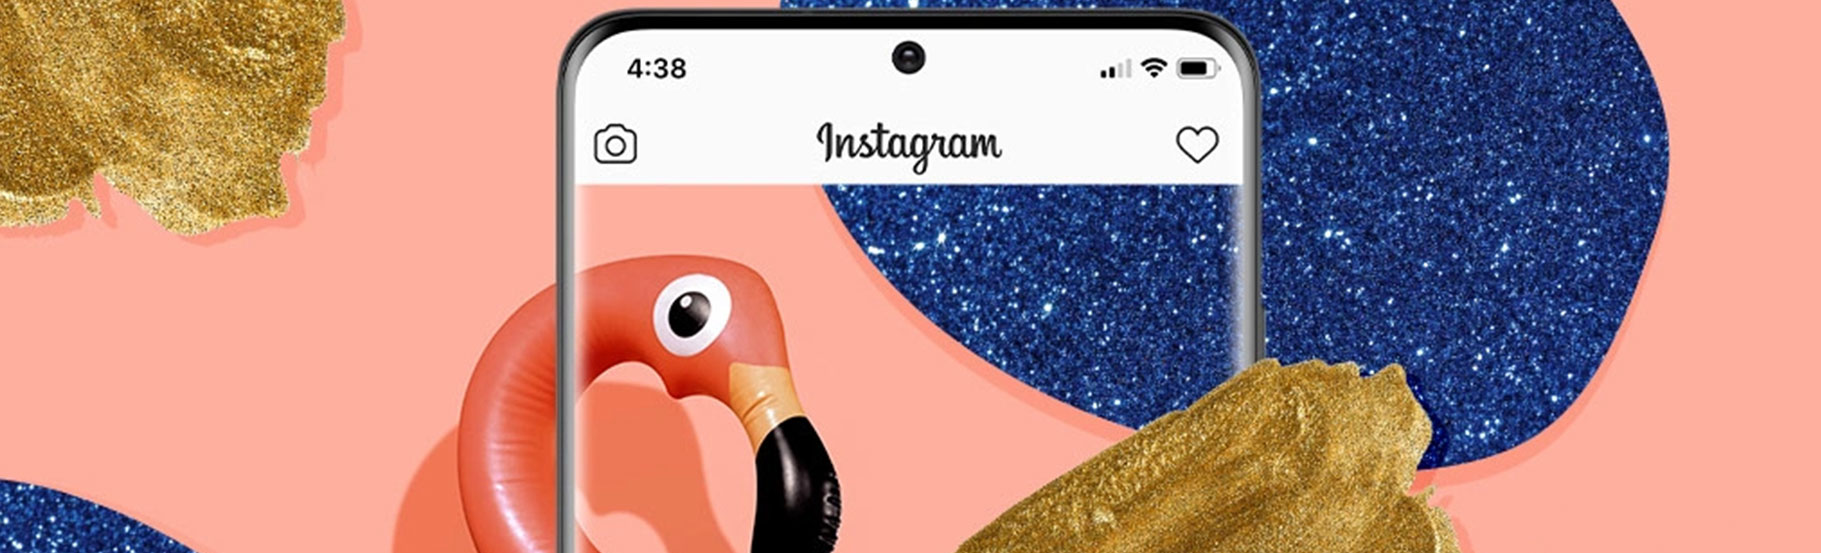 Ekran belog mobilnog telefona i rozi flamingos